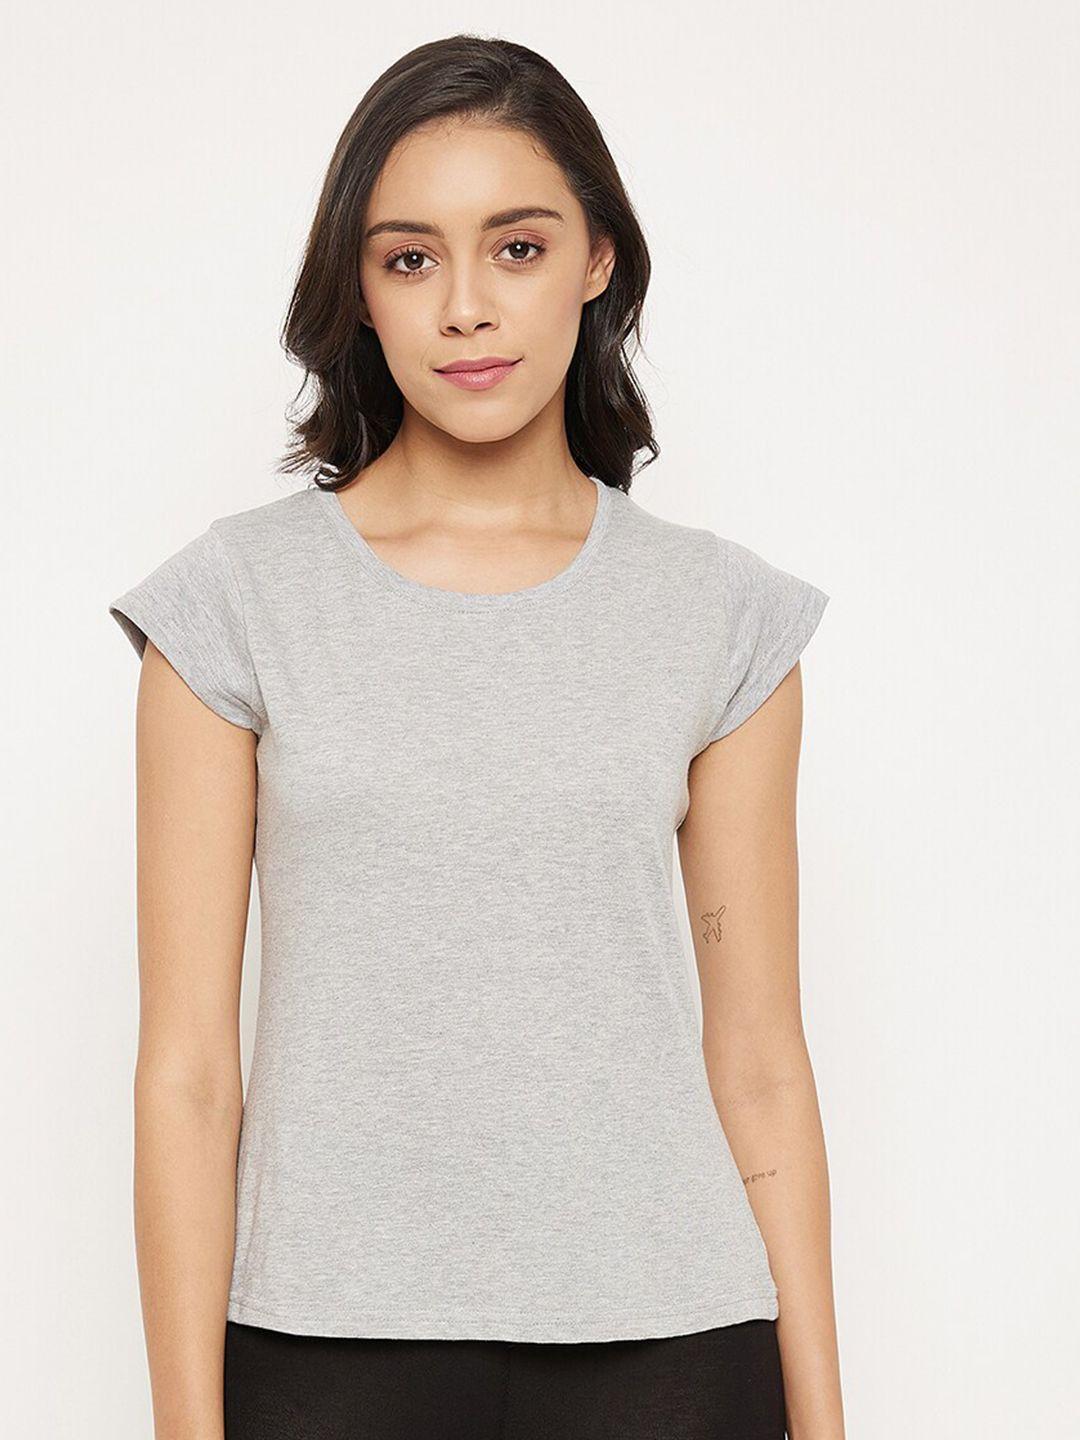 clovia-women-grey-t-shirt